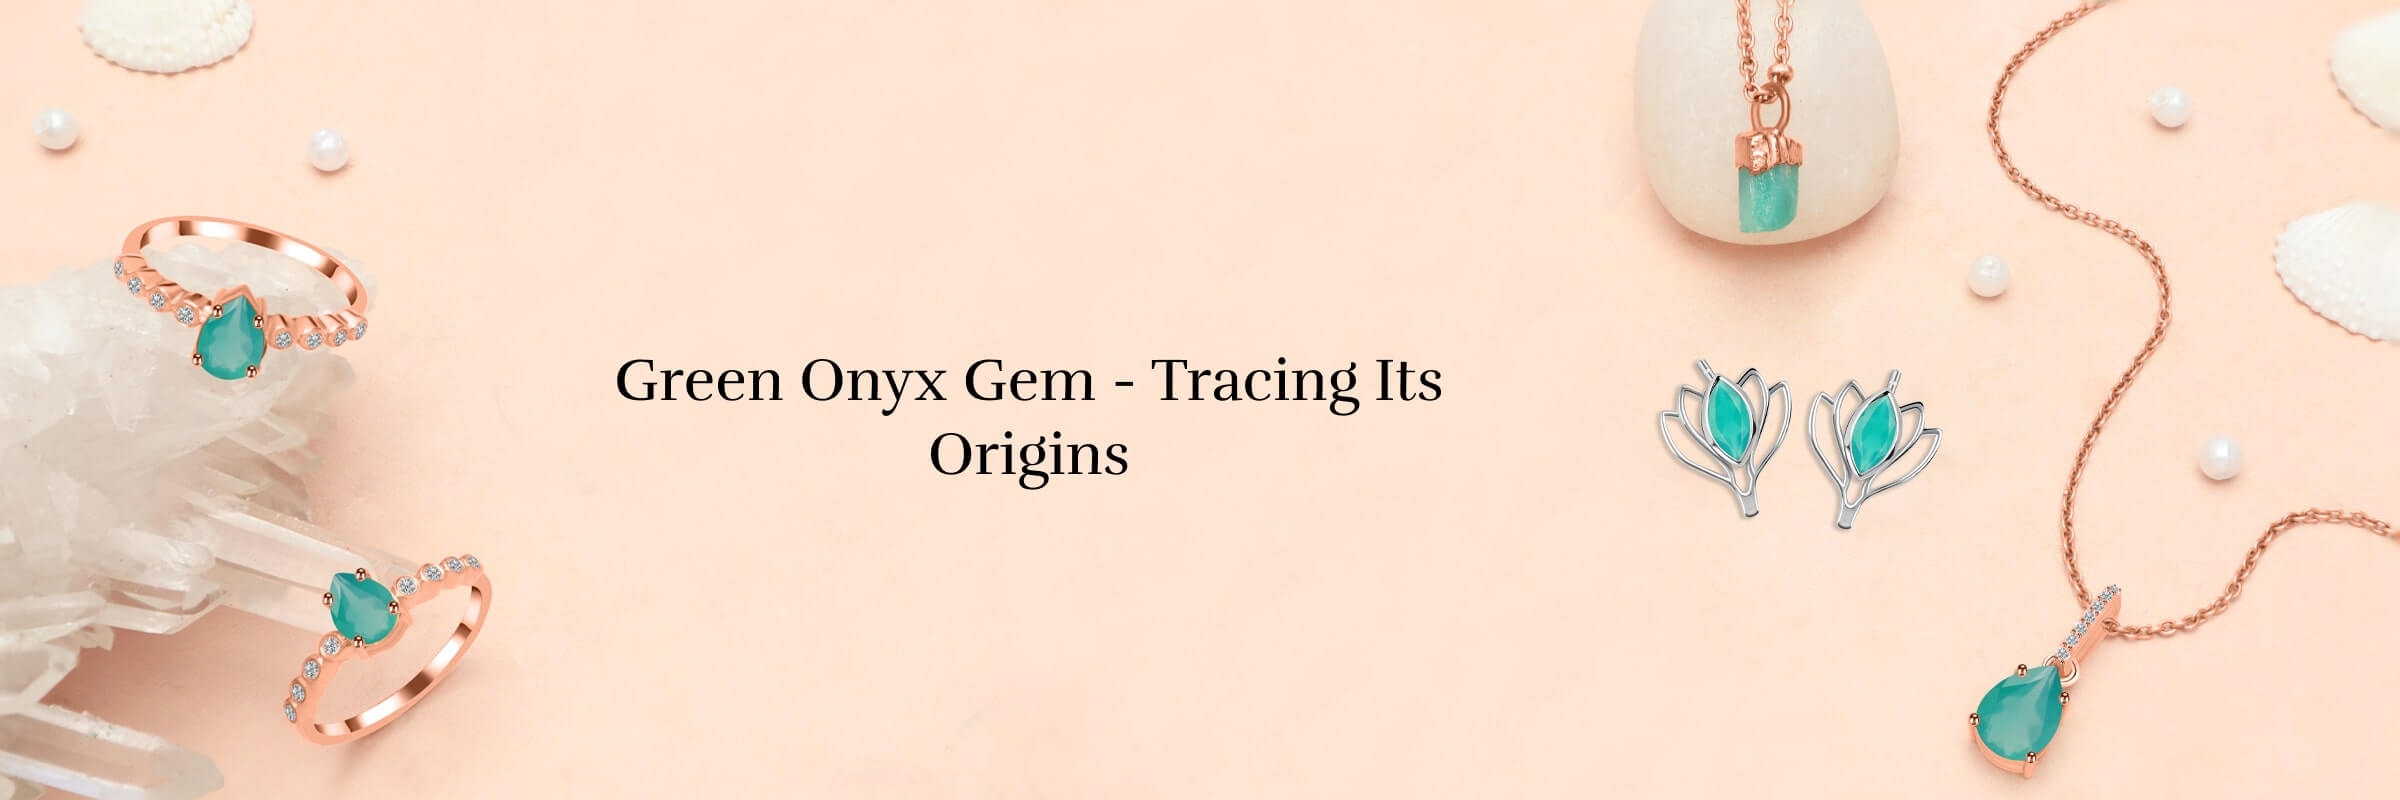 Origin of Green Onyx Gem